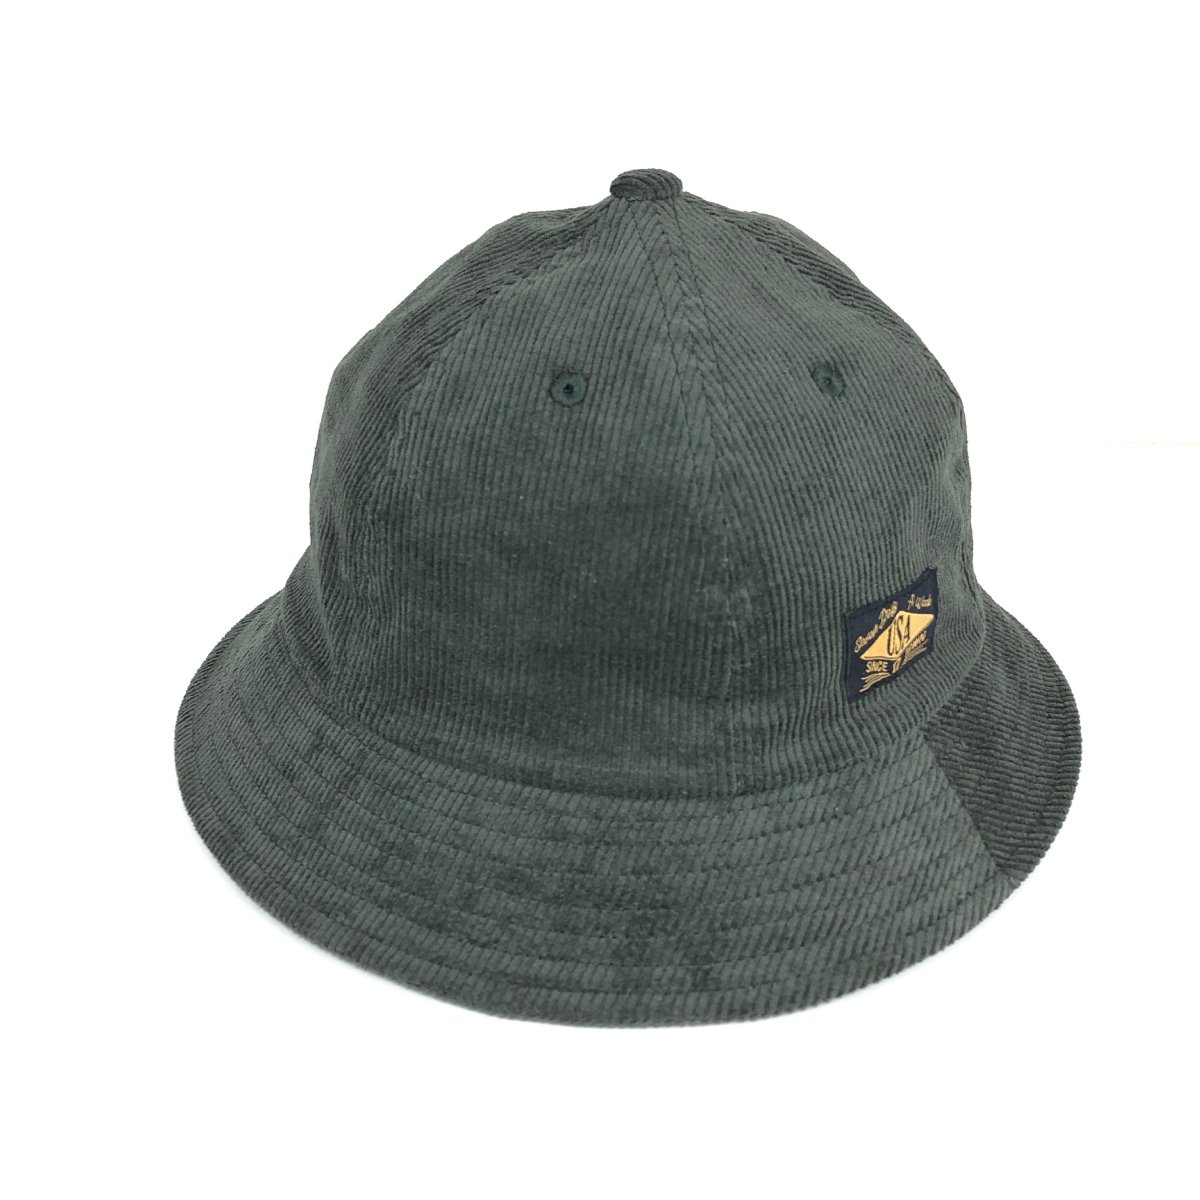 Cod Metro Hat